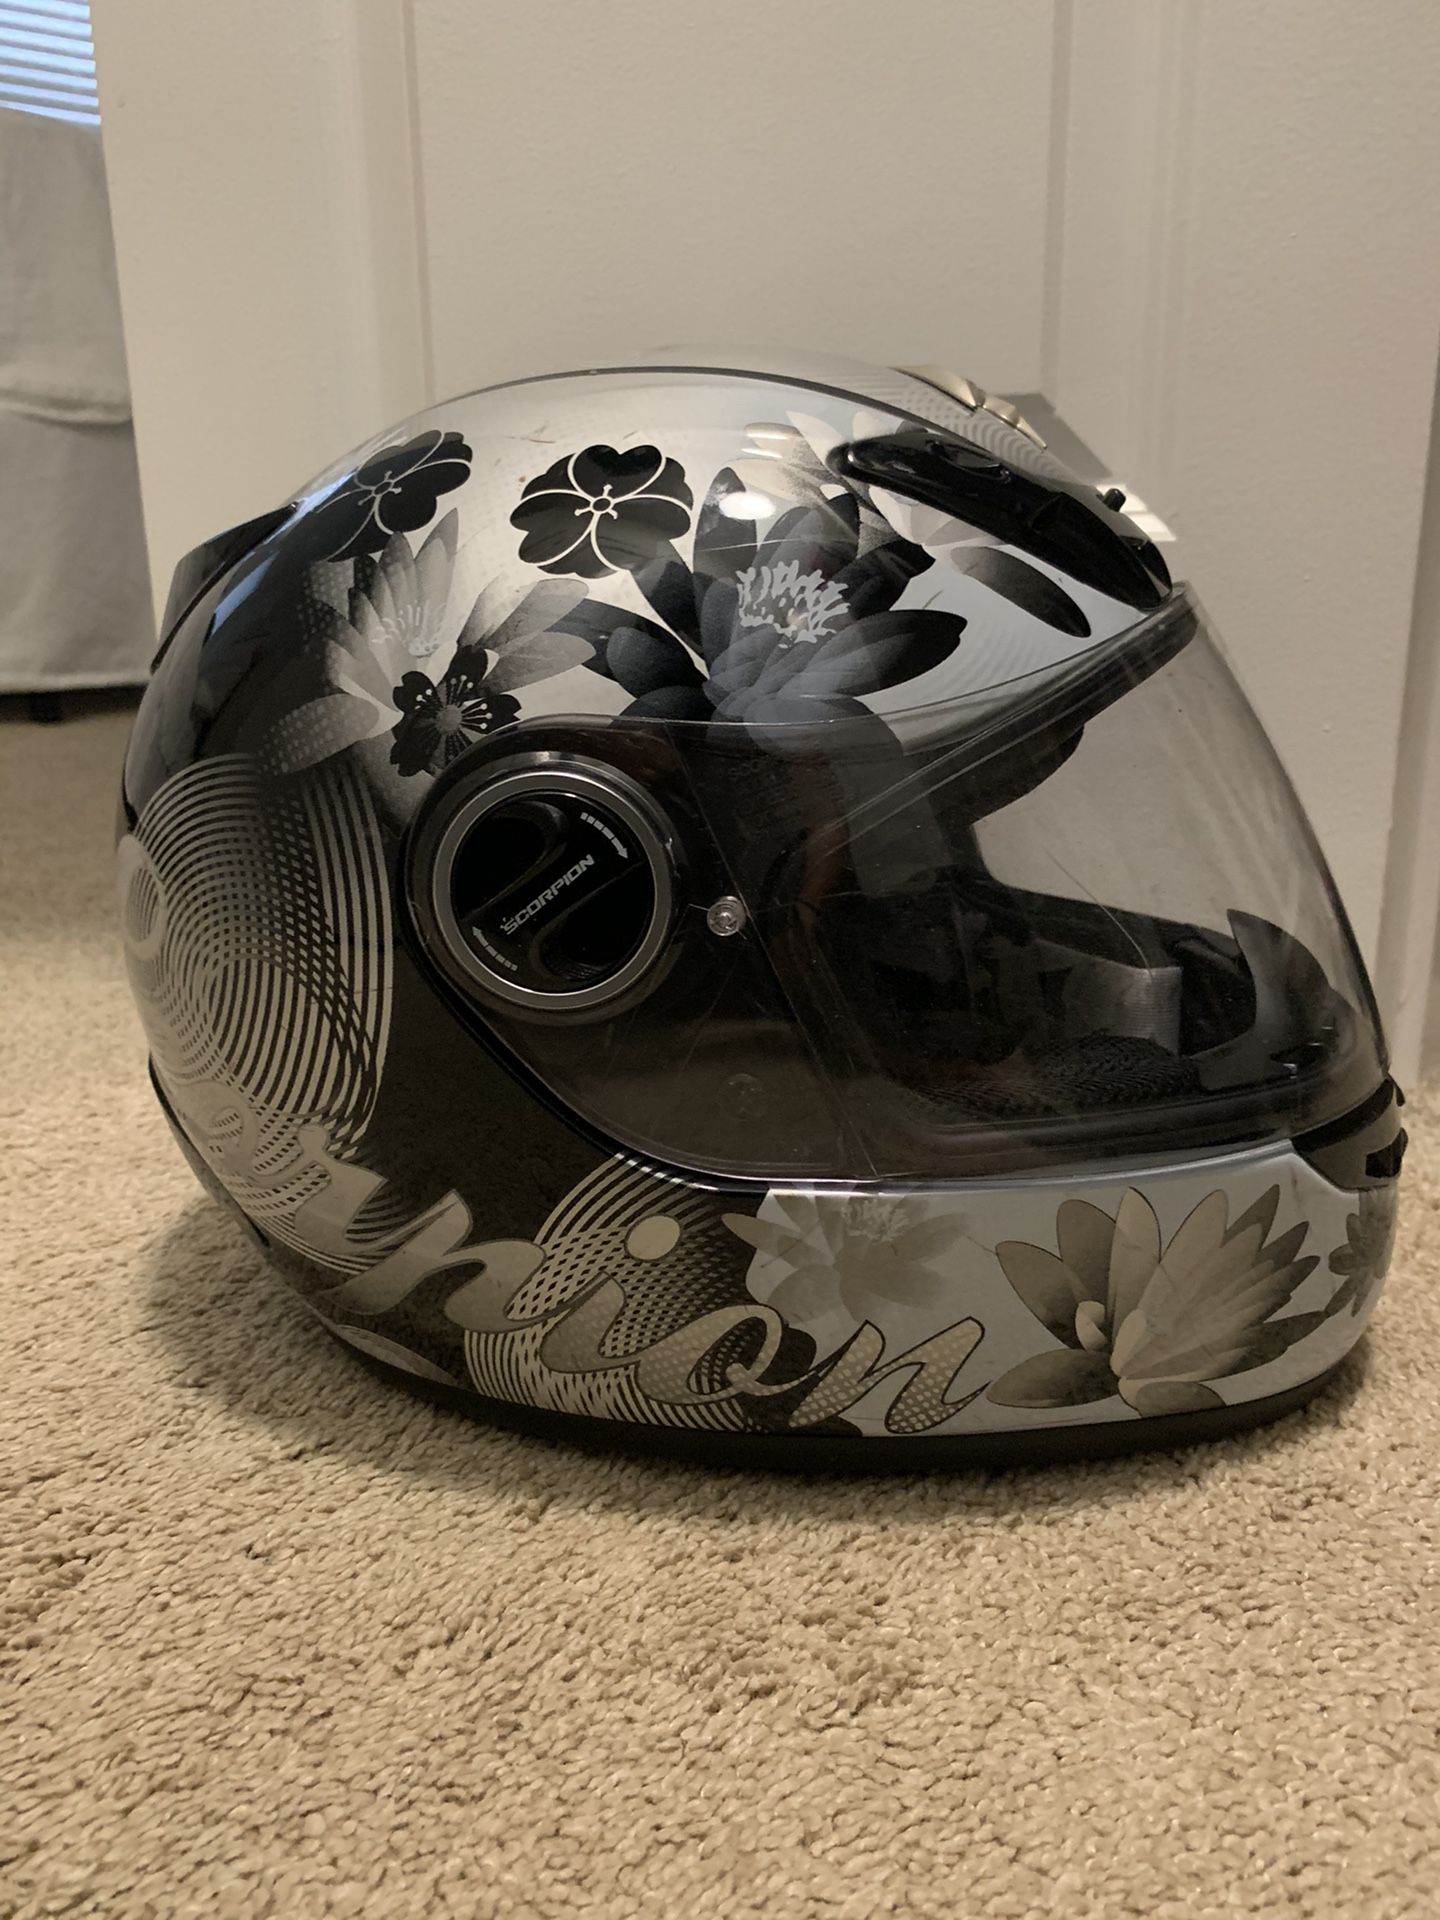 Scorpion Exo-400 Lady Helmet, Size M, $75